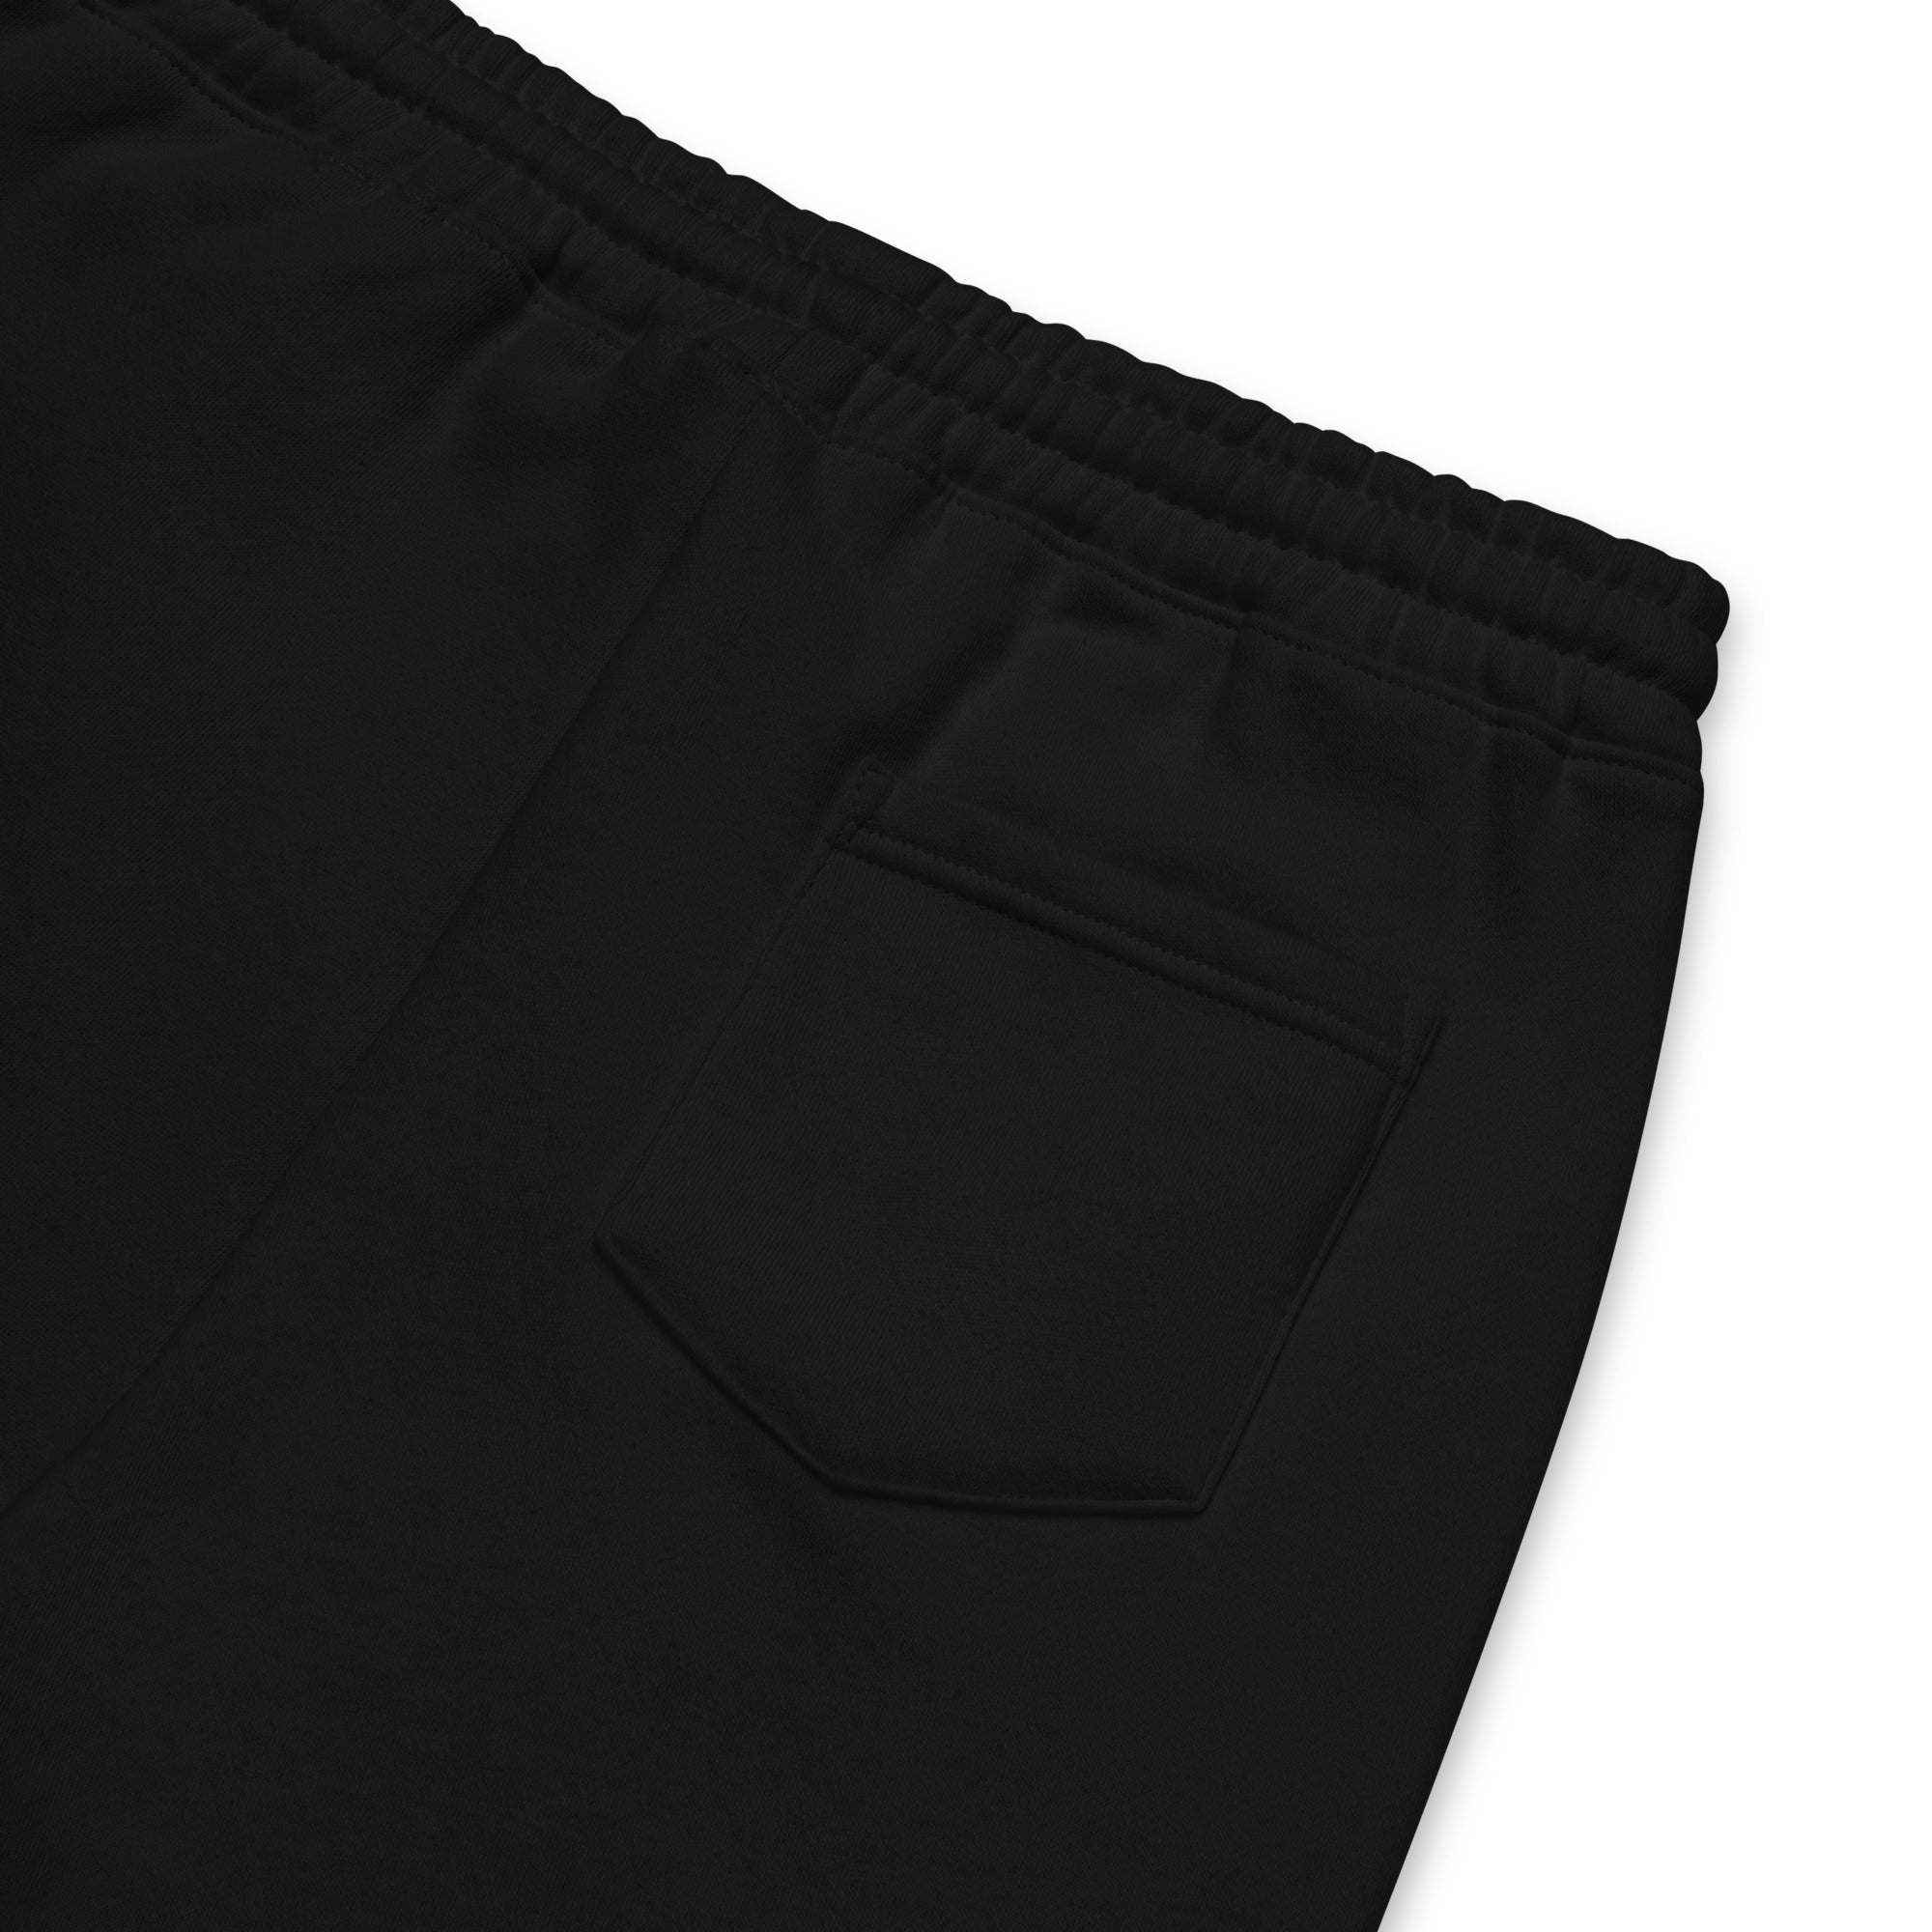 White Baphomet Sigil - Satanic Symbol on Black Men's fleece shorts - Edge of Life Designs